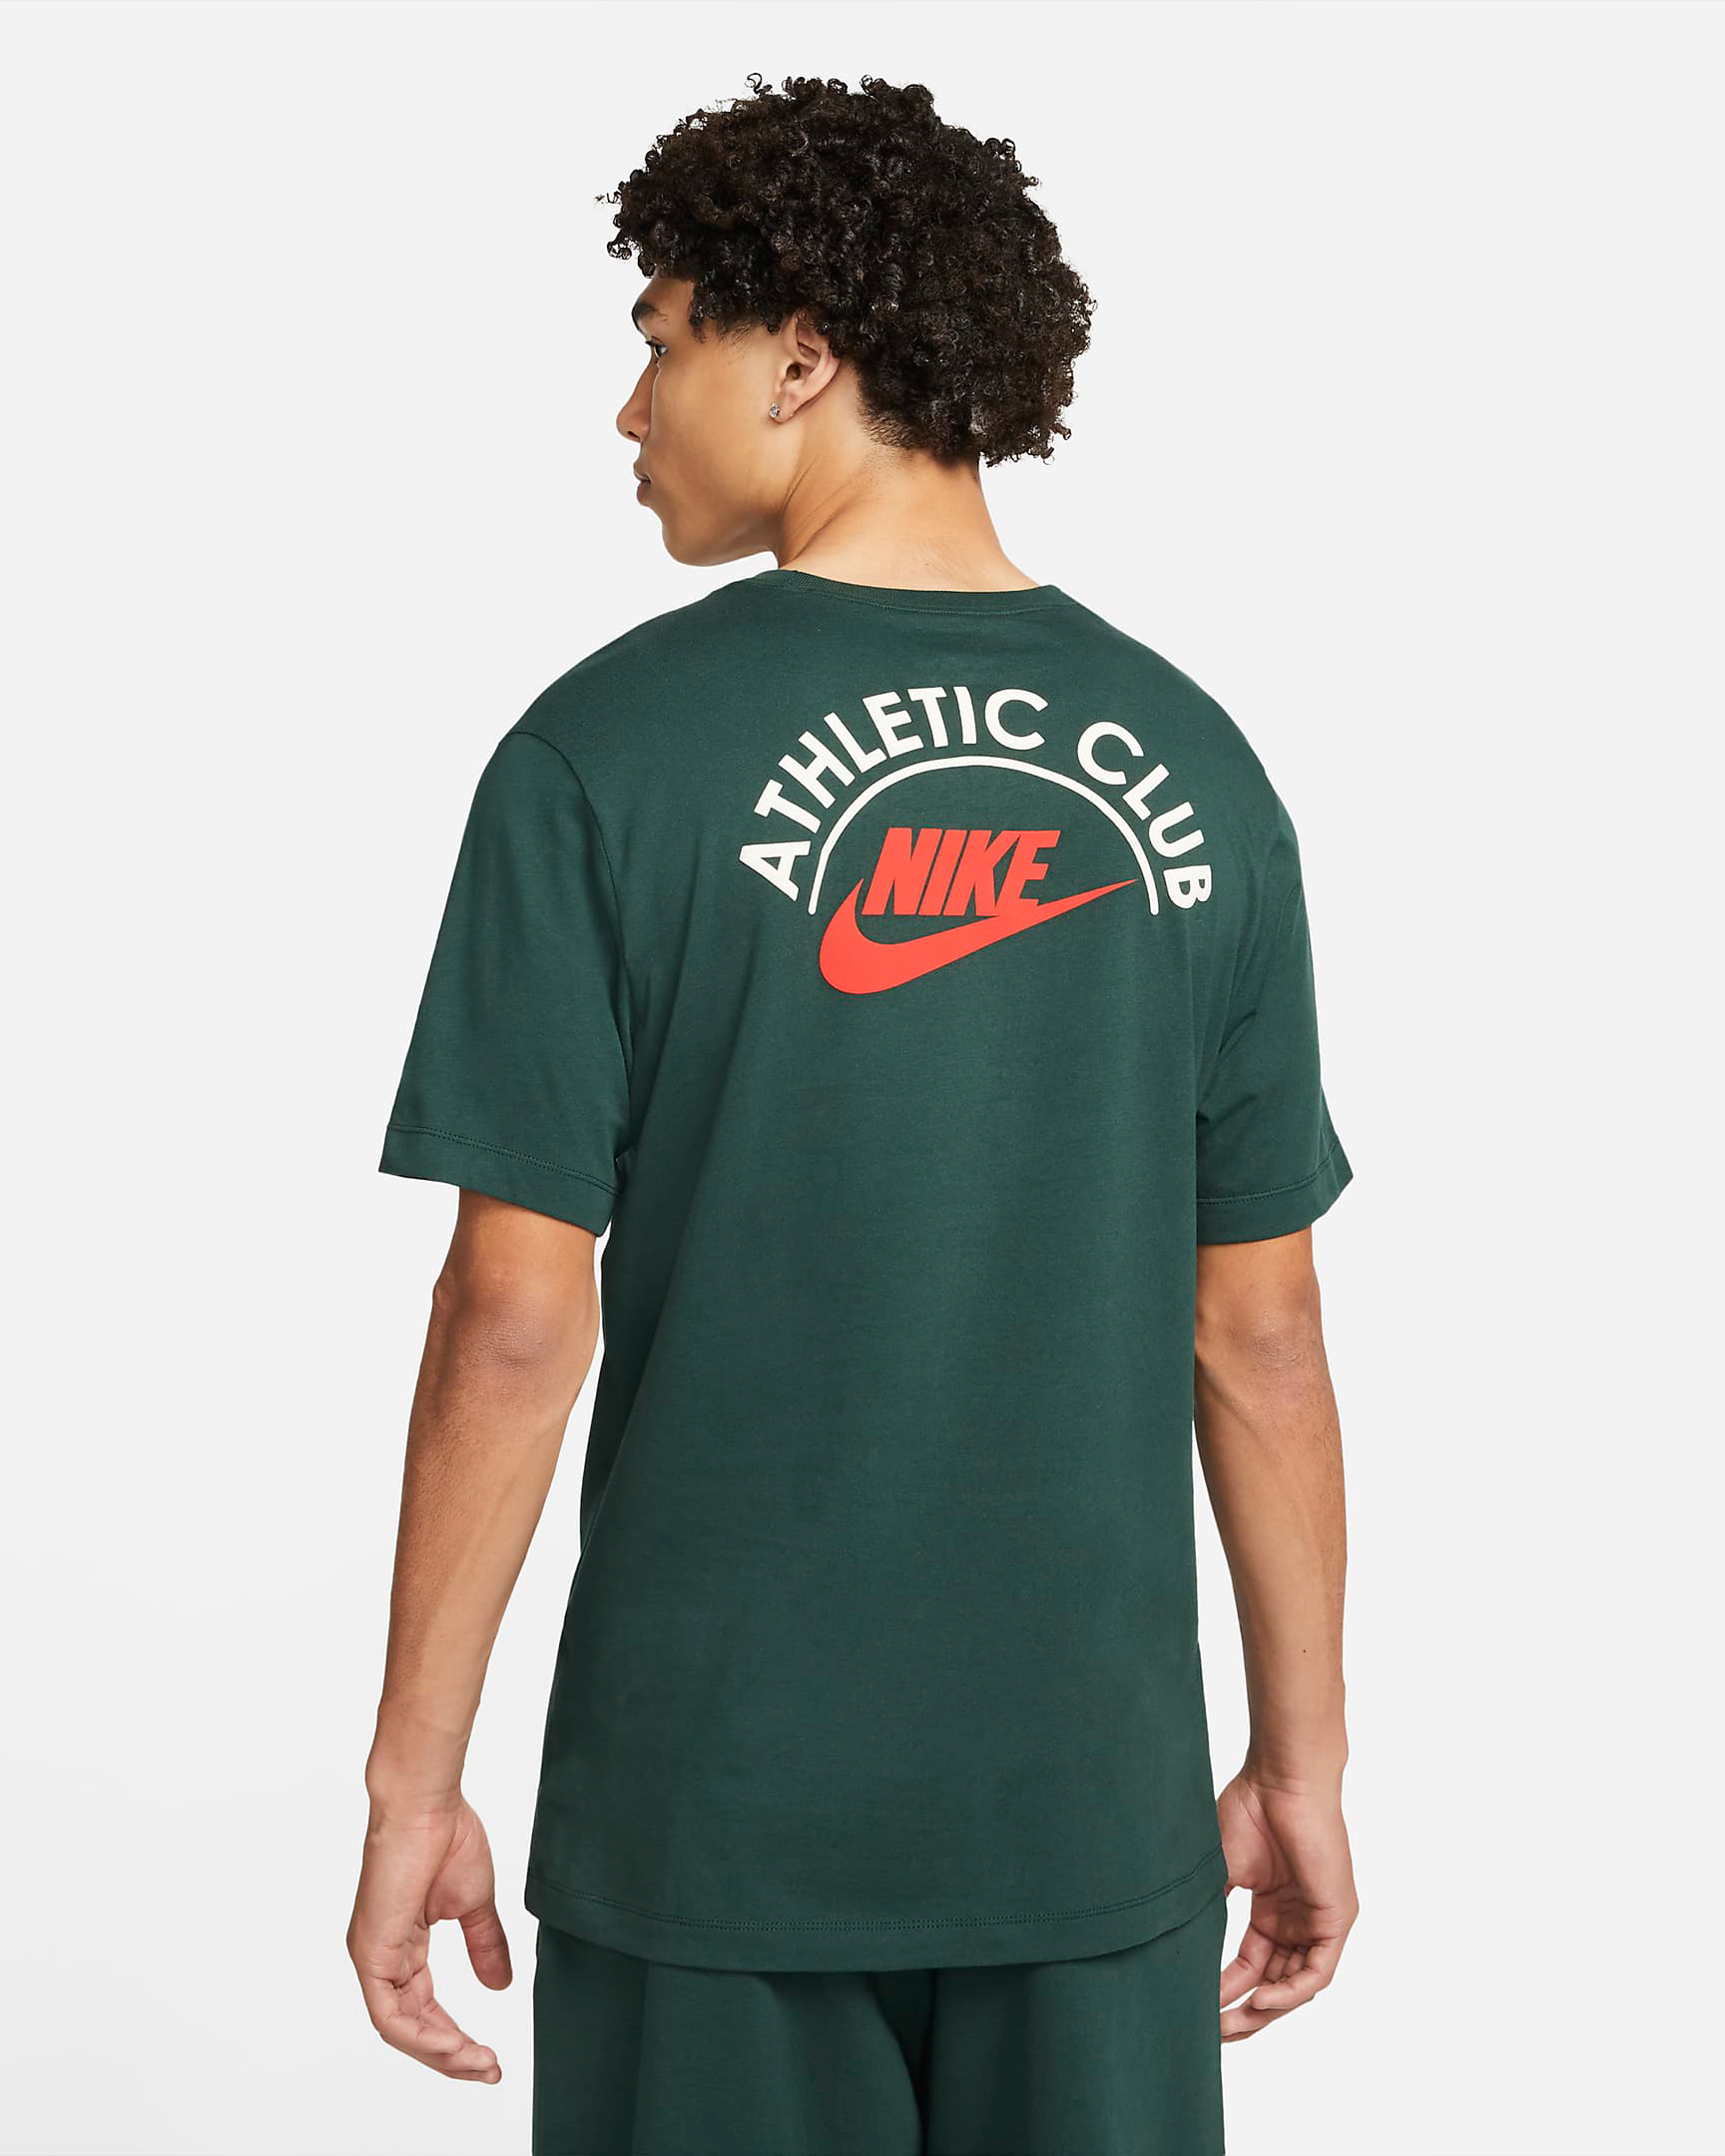 nike-athletic-club-t-shirt-pro-green-2